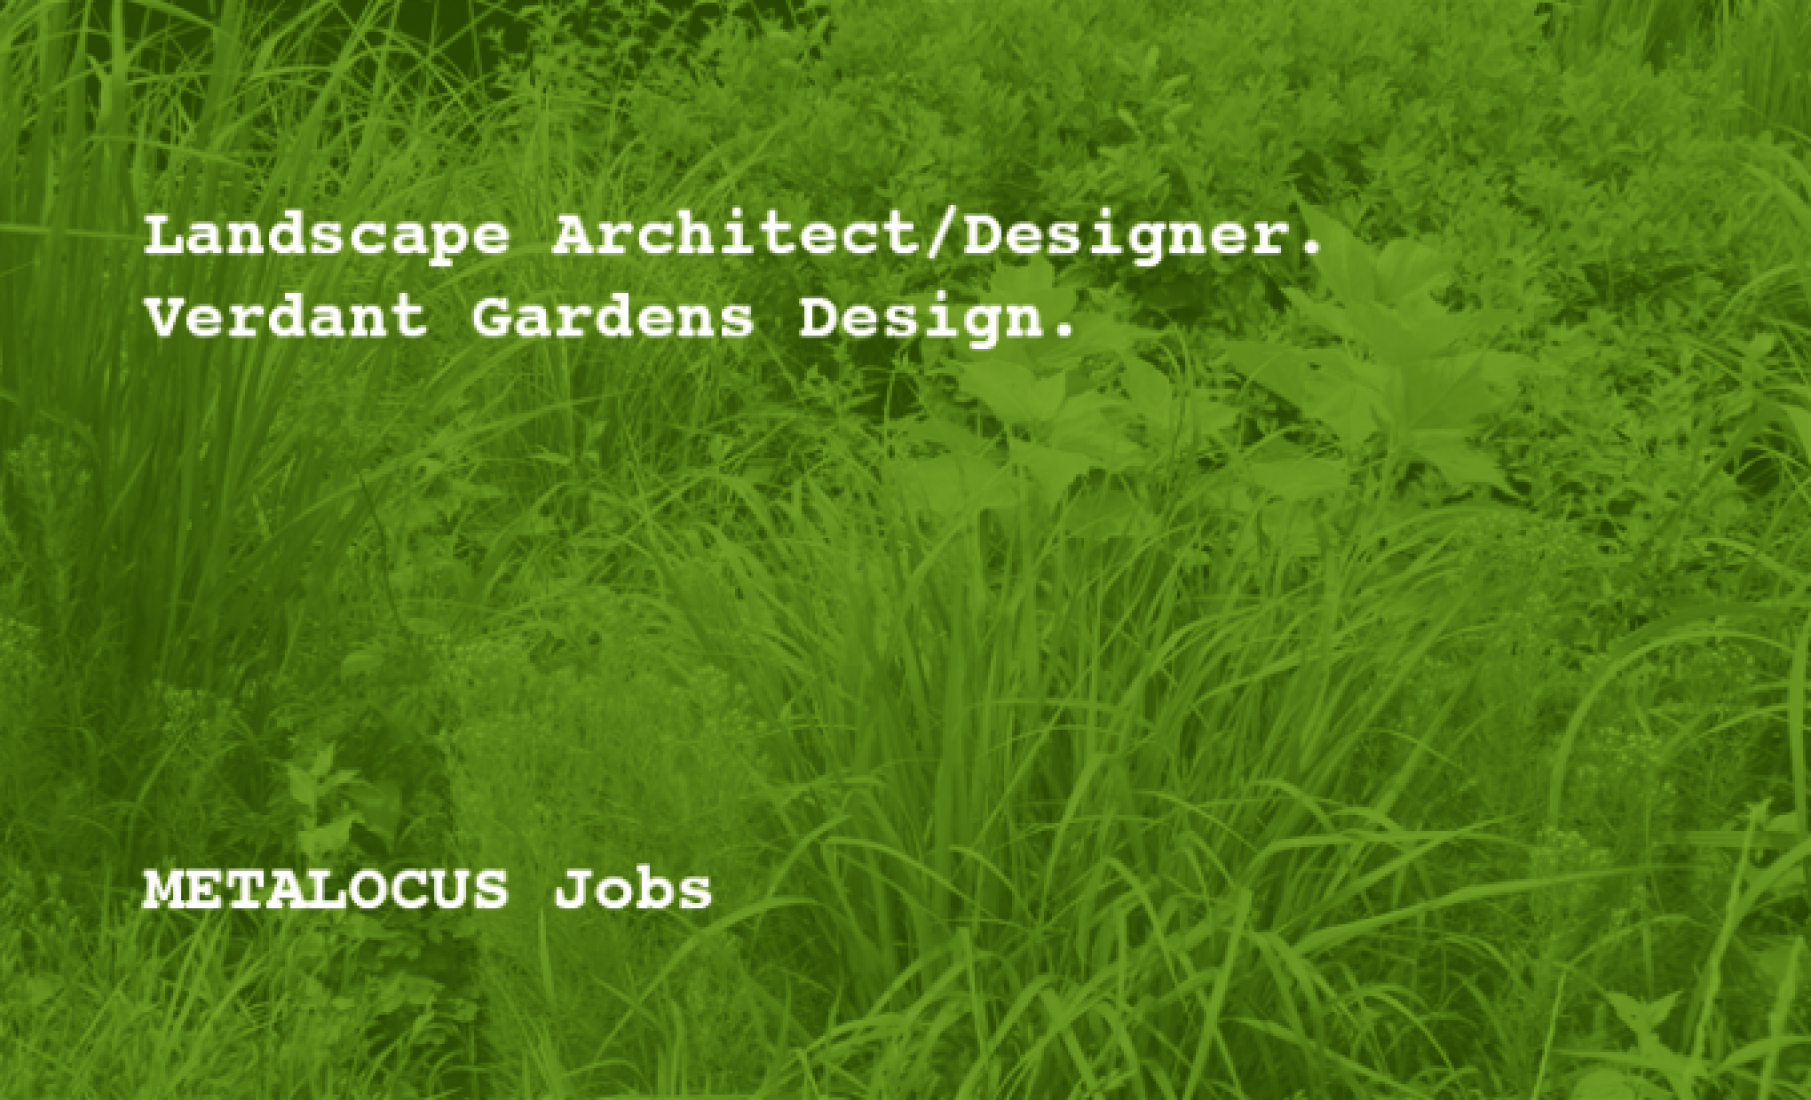 Landscape Architect/Designer. Verdant Gardens Design